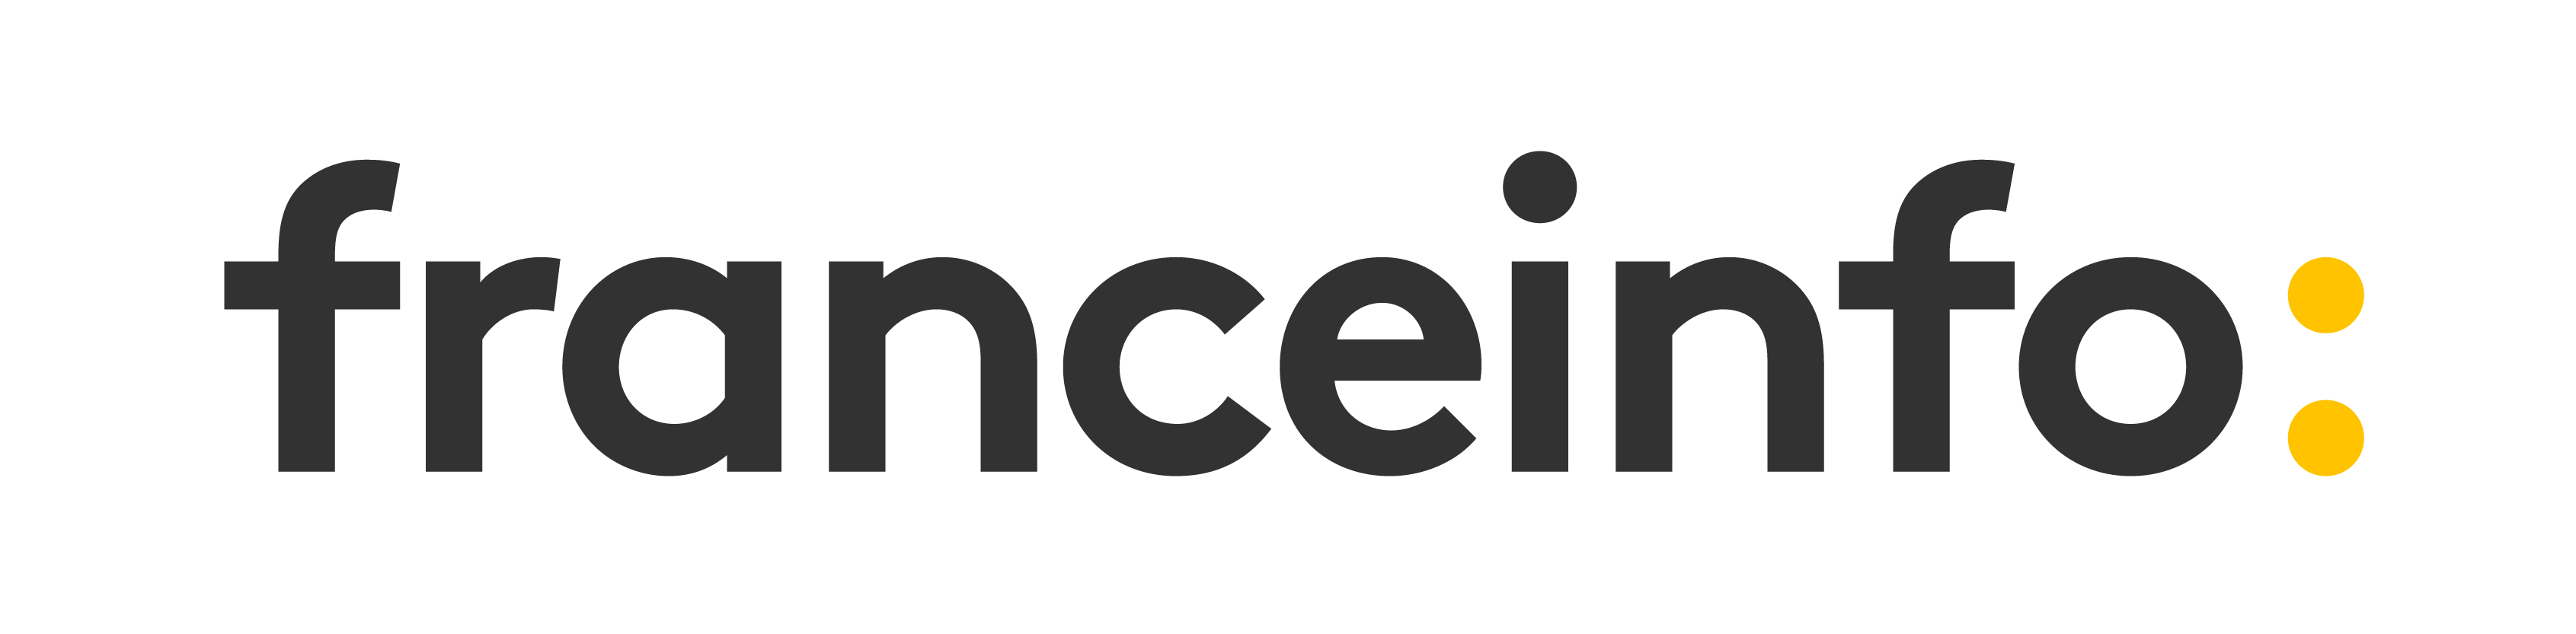 franceinfo logo